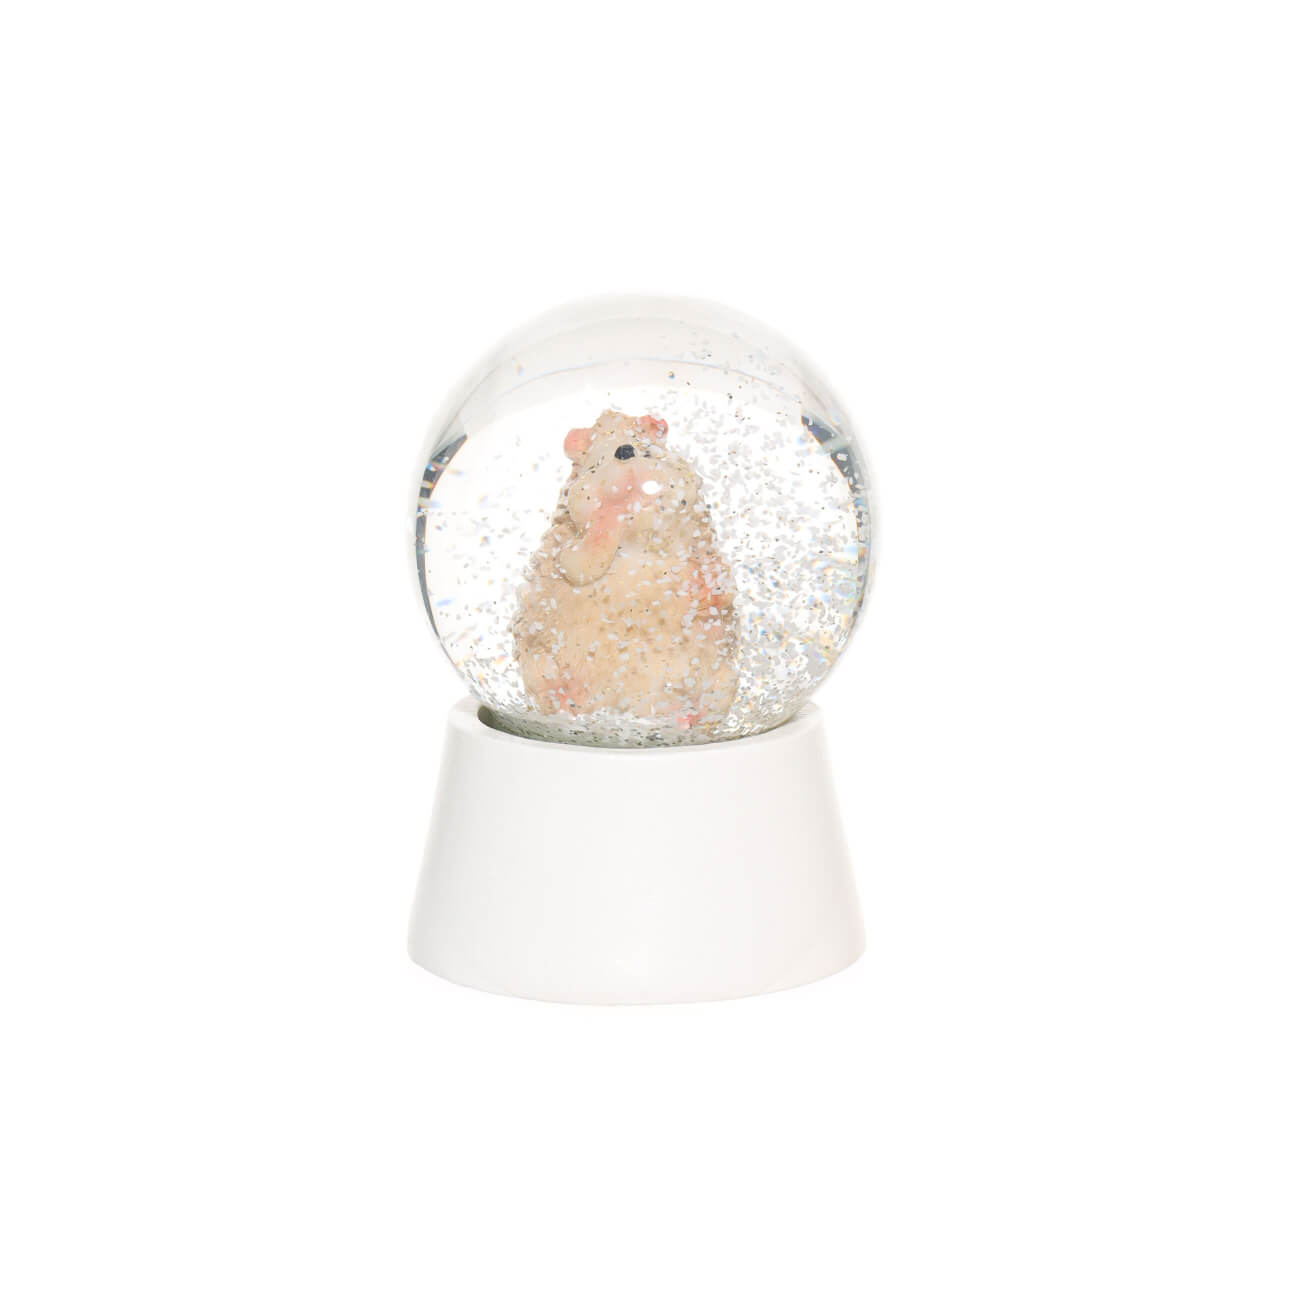 Снежный шар, 7 см, полирезин/стекло, Еж, Forest animals